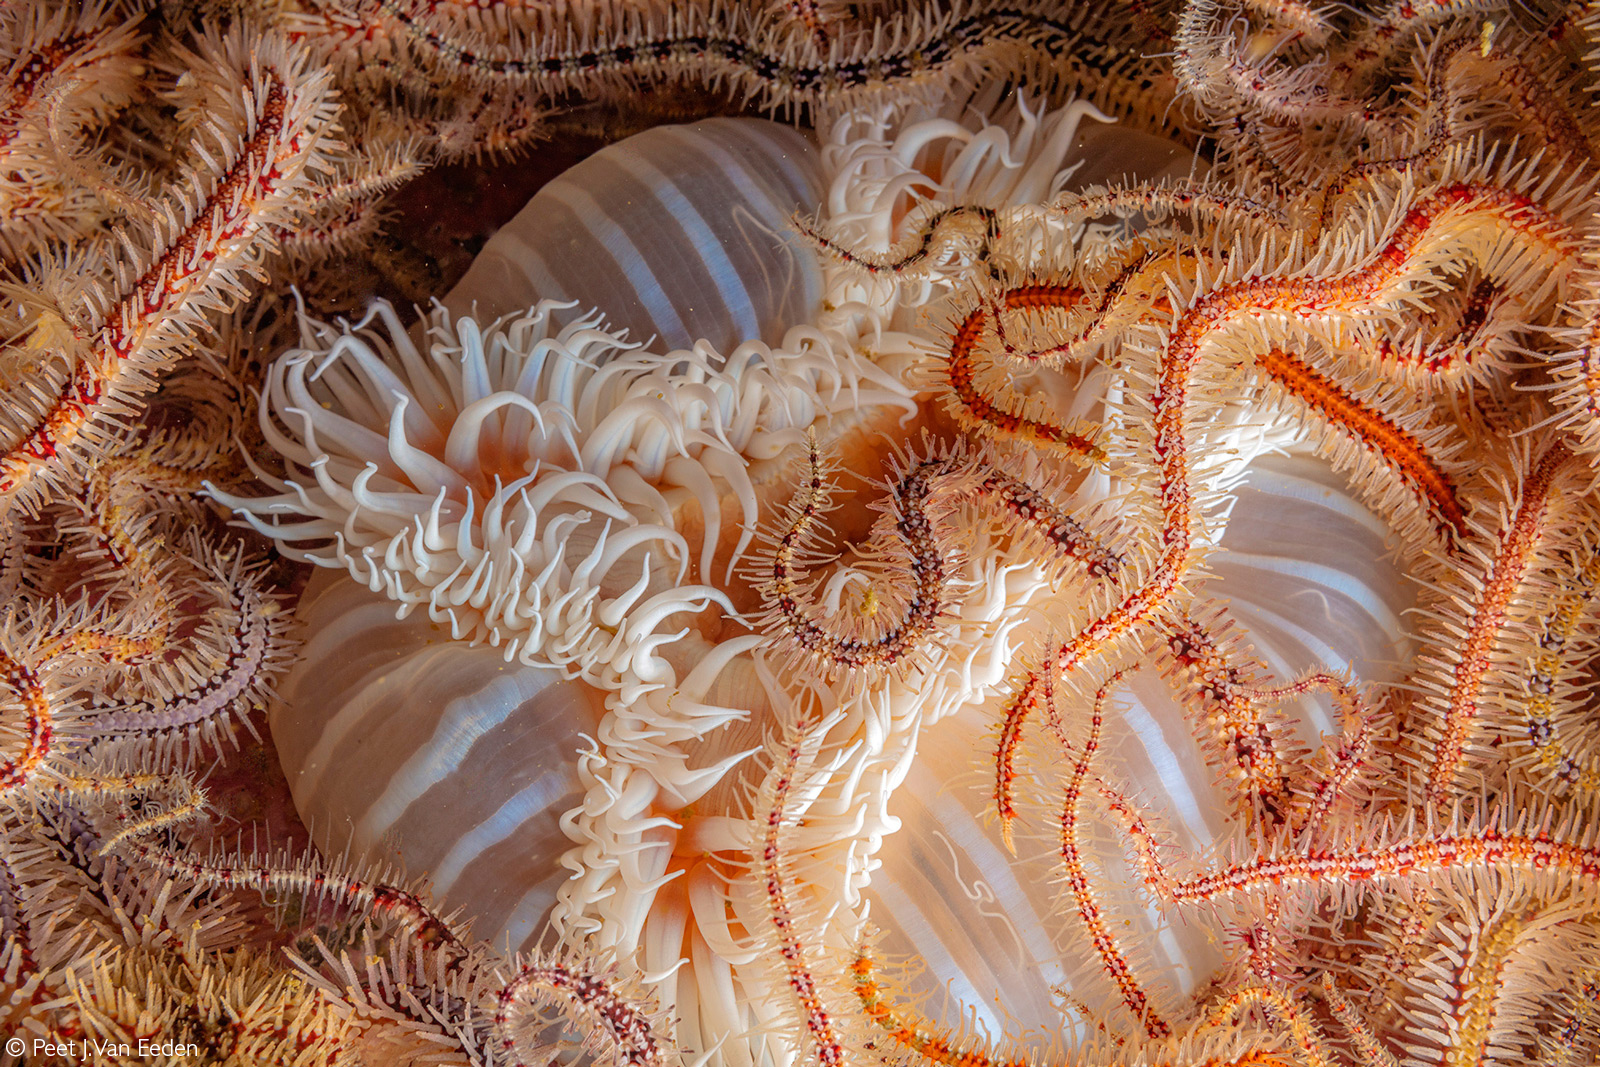 Interwoven brittle stars with a sandy anemone. Outer Photographer’s Reef near Simonstown, South Africa © Peet J. Van Eeden